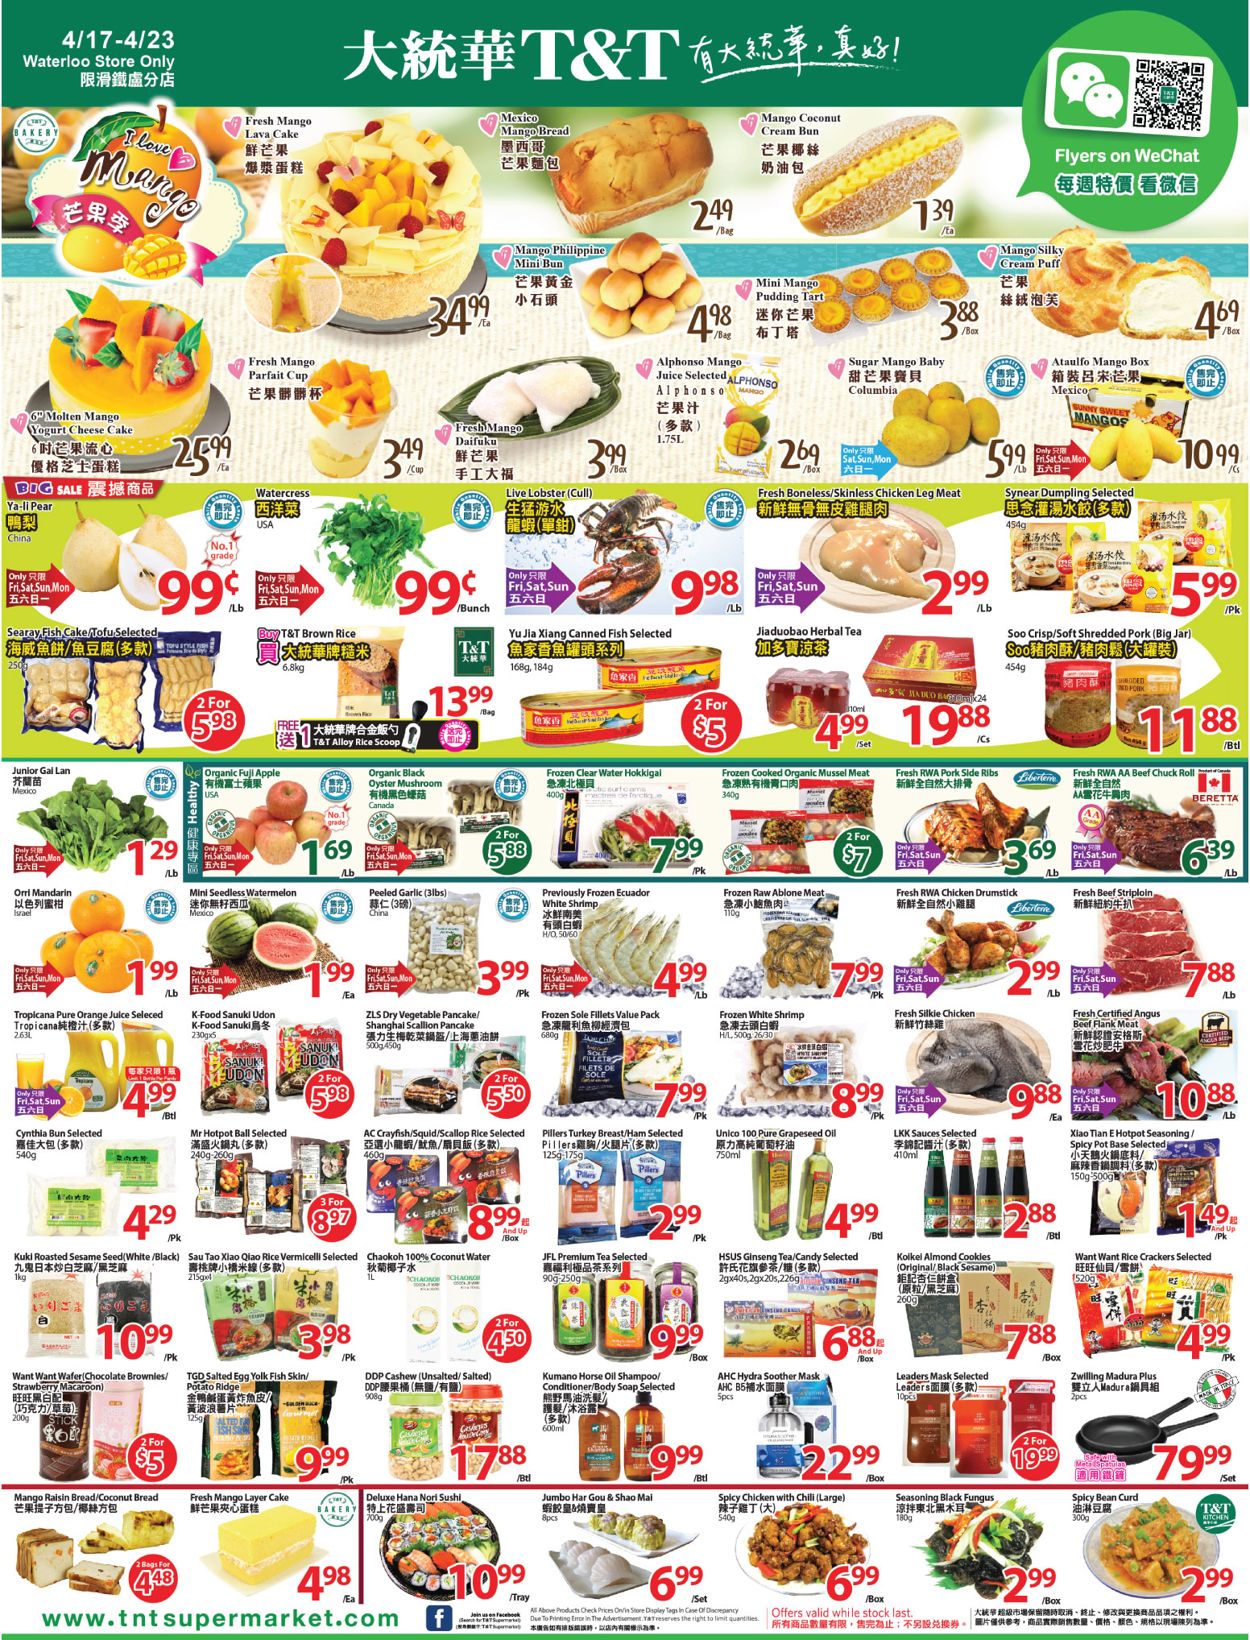 T&T Supermarket Flyer - 04/17-04/23/2020